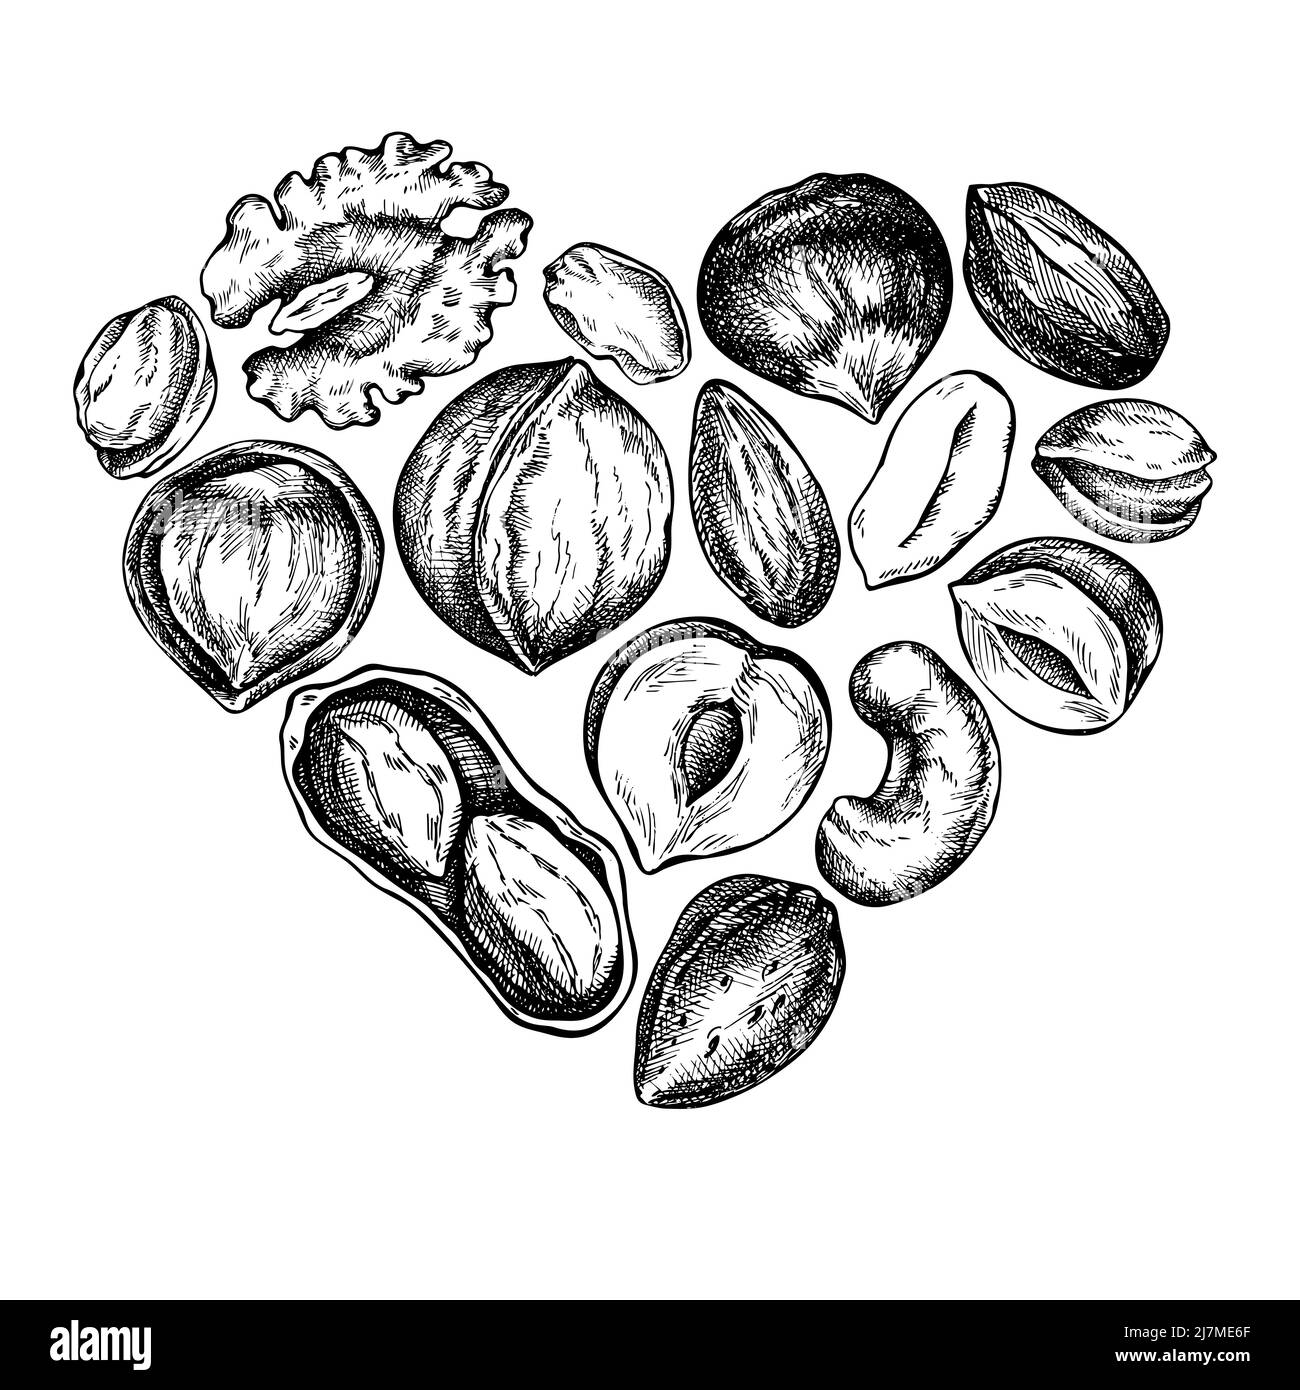 Heart design with black and white cashew, peanut, pistachio, etc. Stock Vector